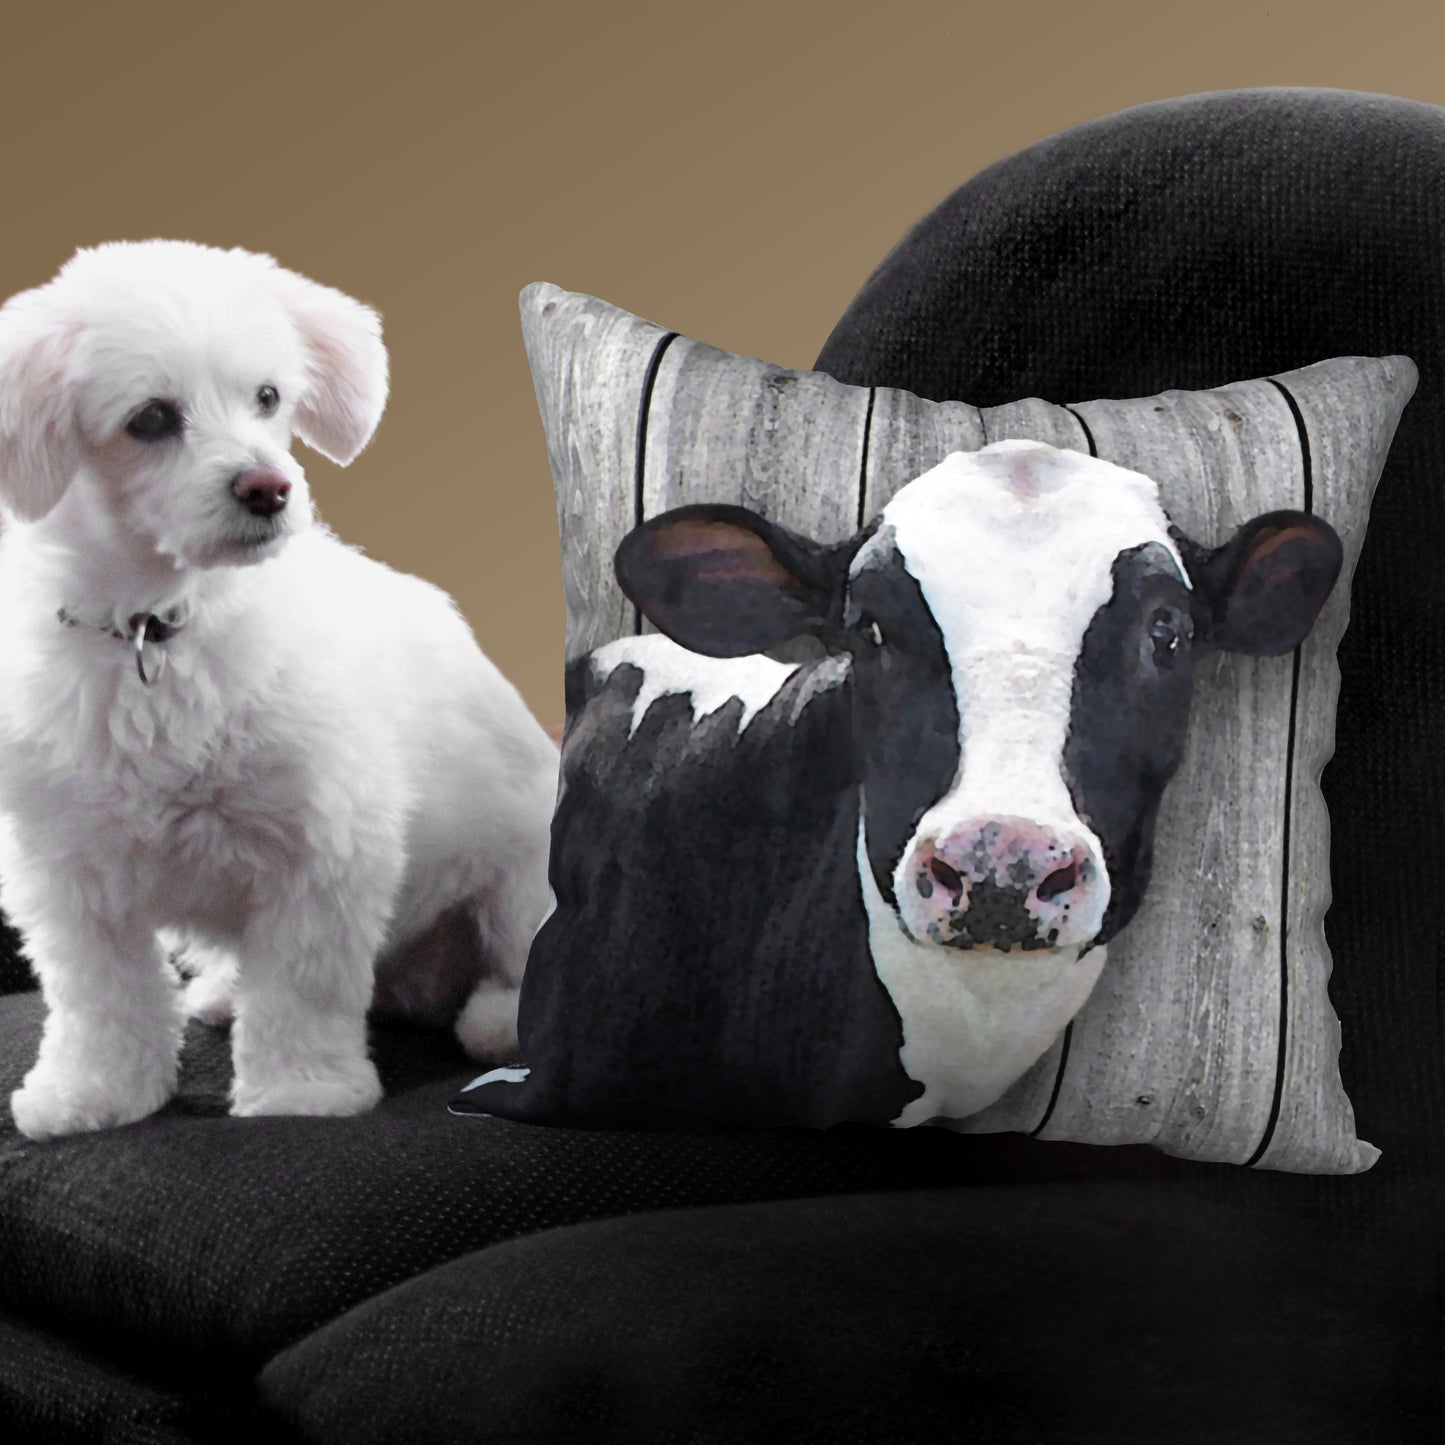 Black & White Cow Designer Pillow, 18"x18"